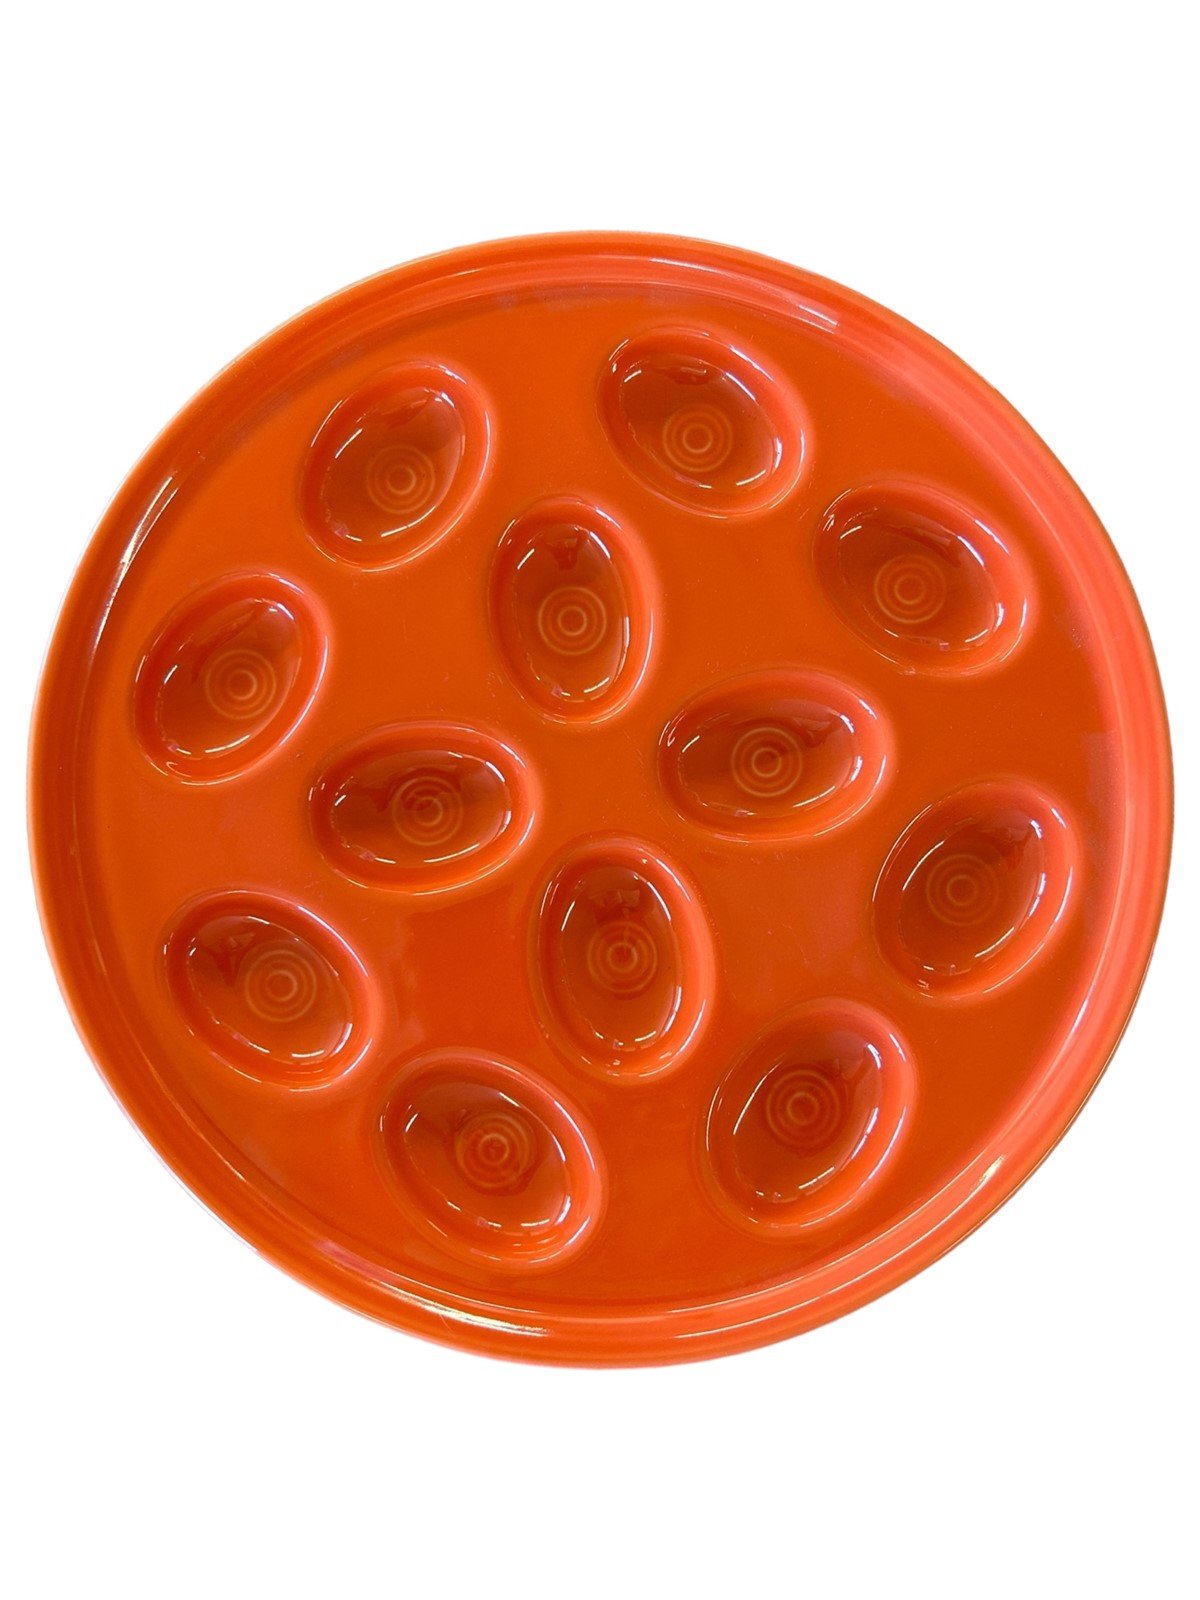 Fiesta - Poppy Orange Small Egg Plate Tray Serving Dish Homer Laughlin Ceramic